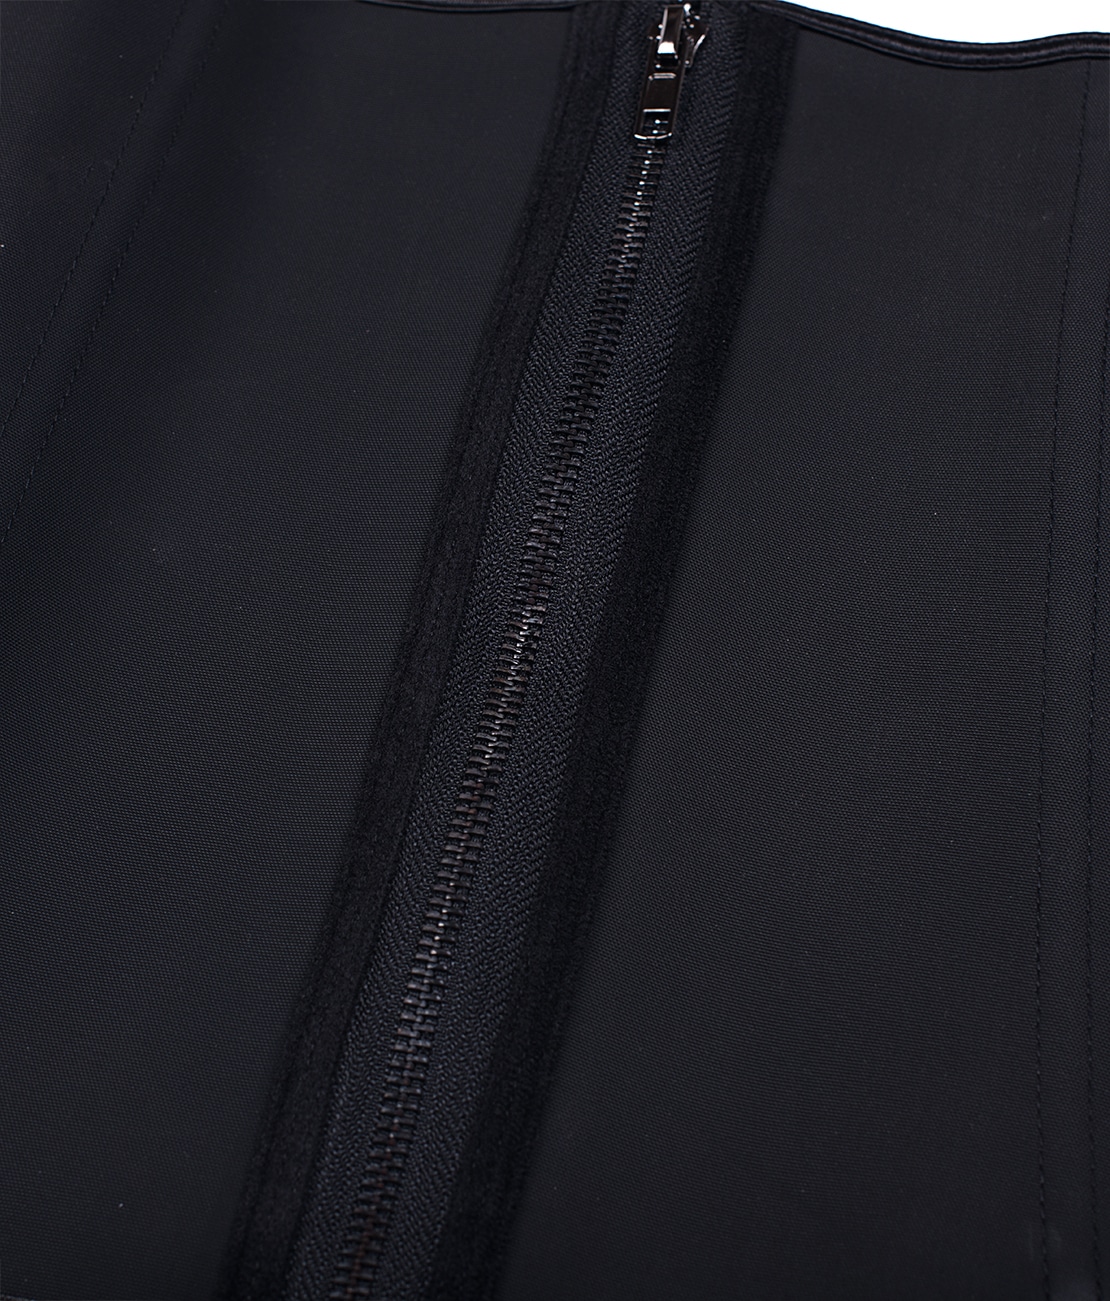 Gaine Femme Noir Packshot Detail 2